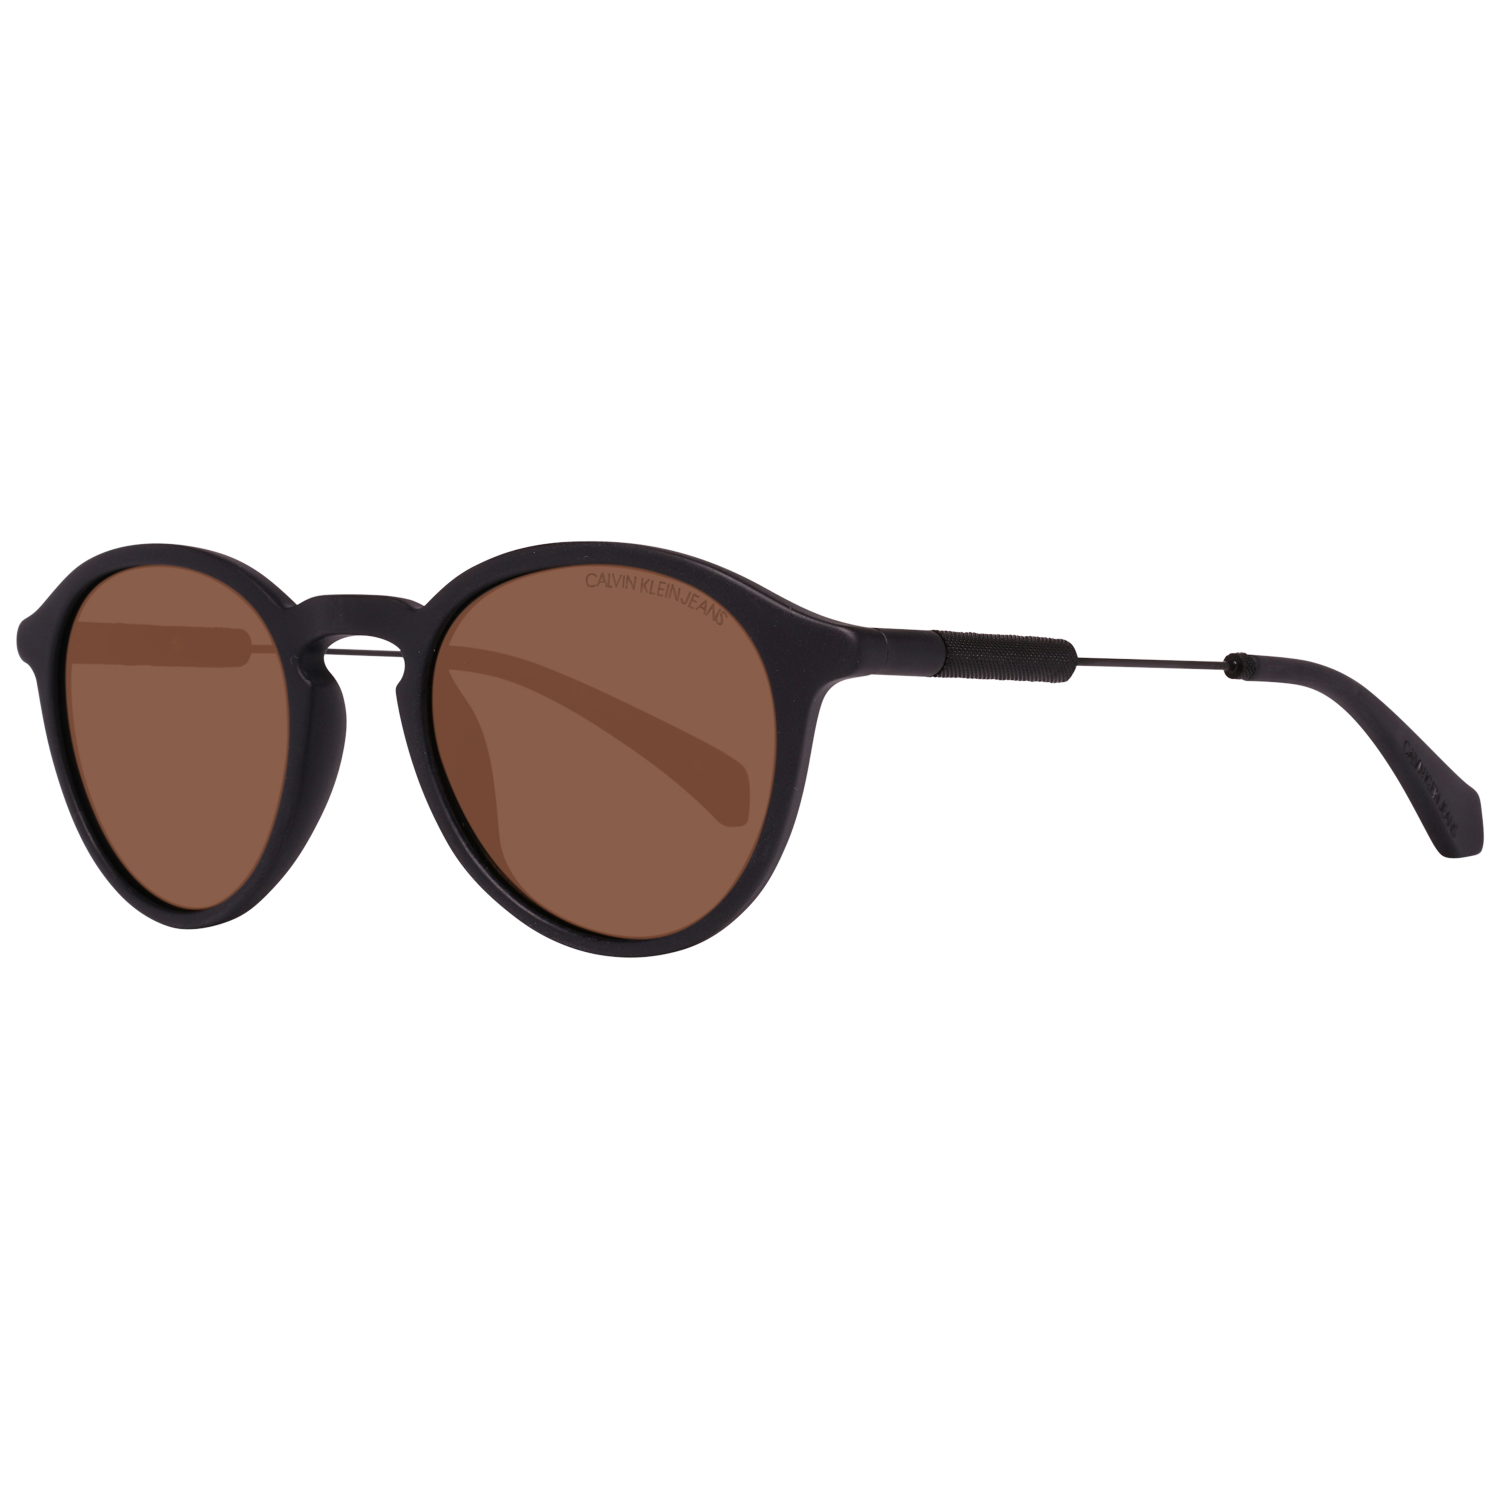 Calvin Klein Sunglasses CKJ489S 002 49